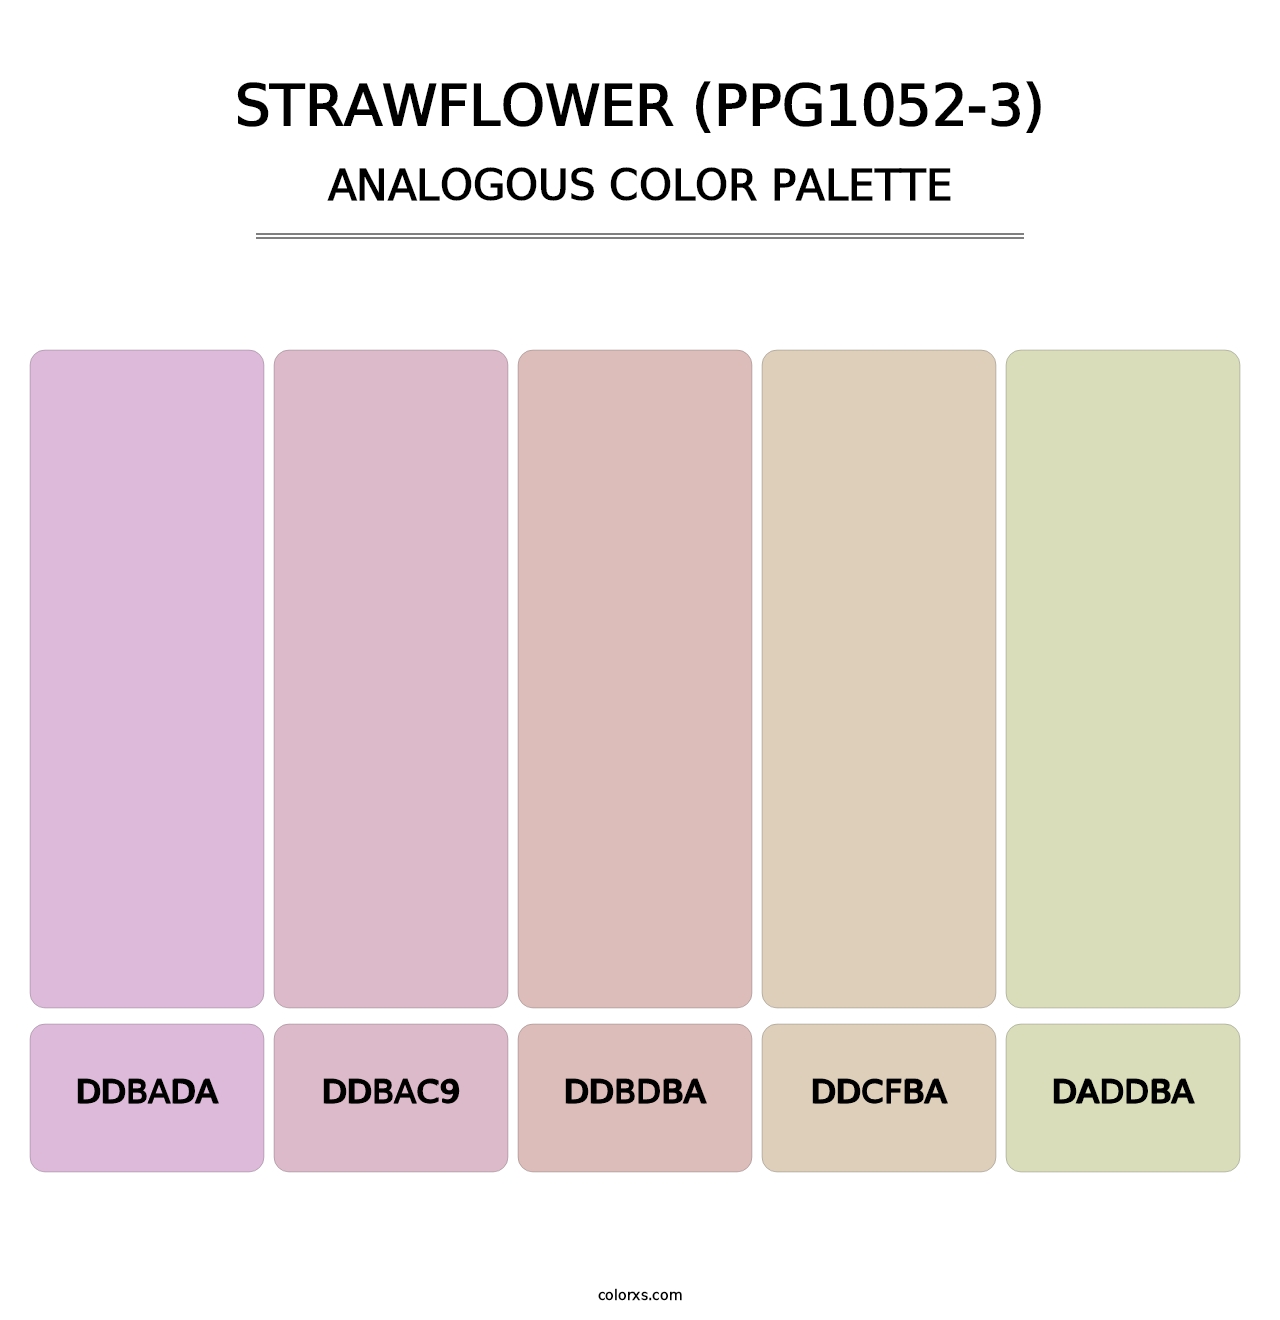 Strawflower (PPG1052-3) - Analogous Color Palette